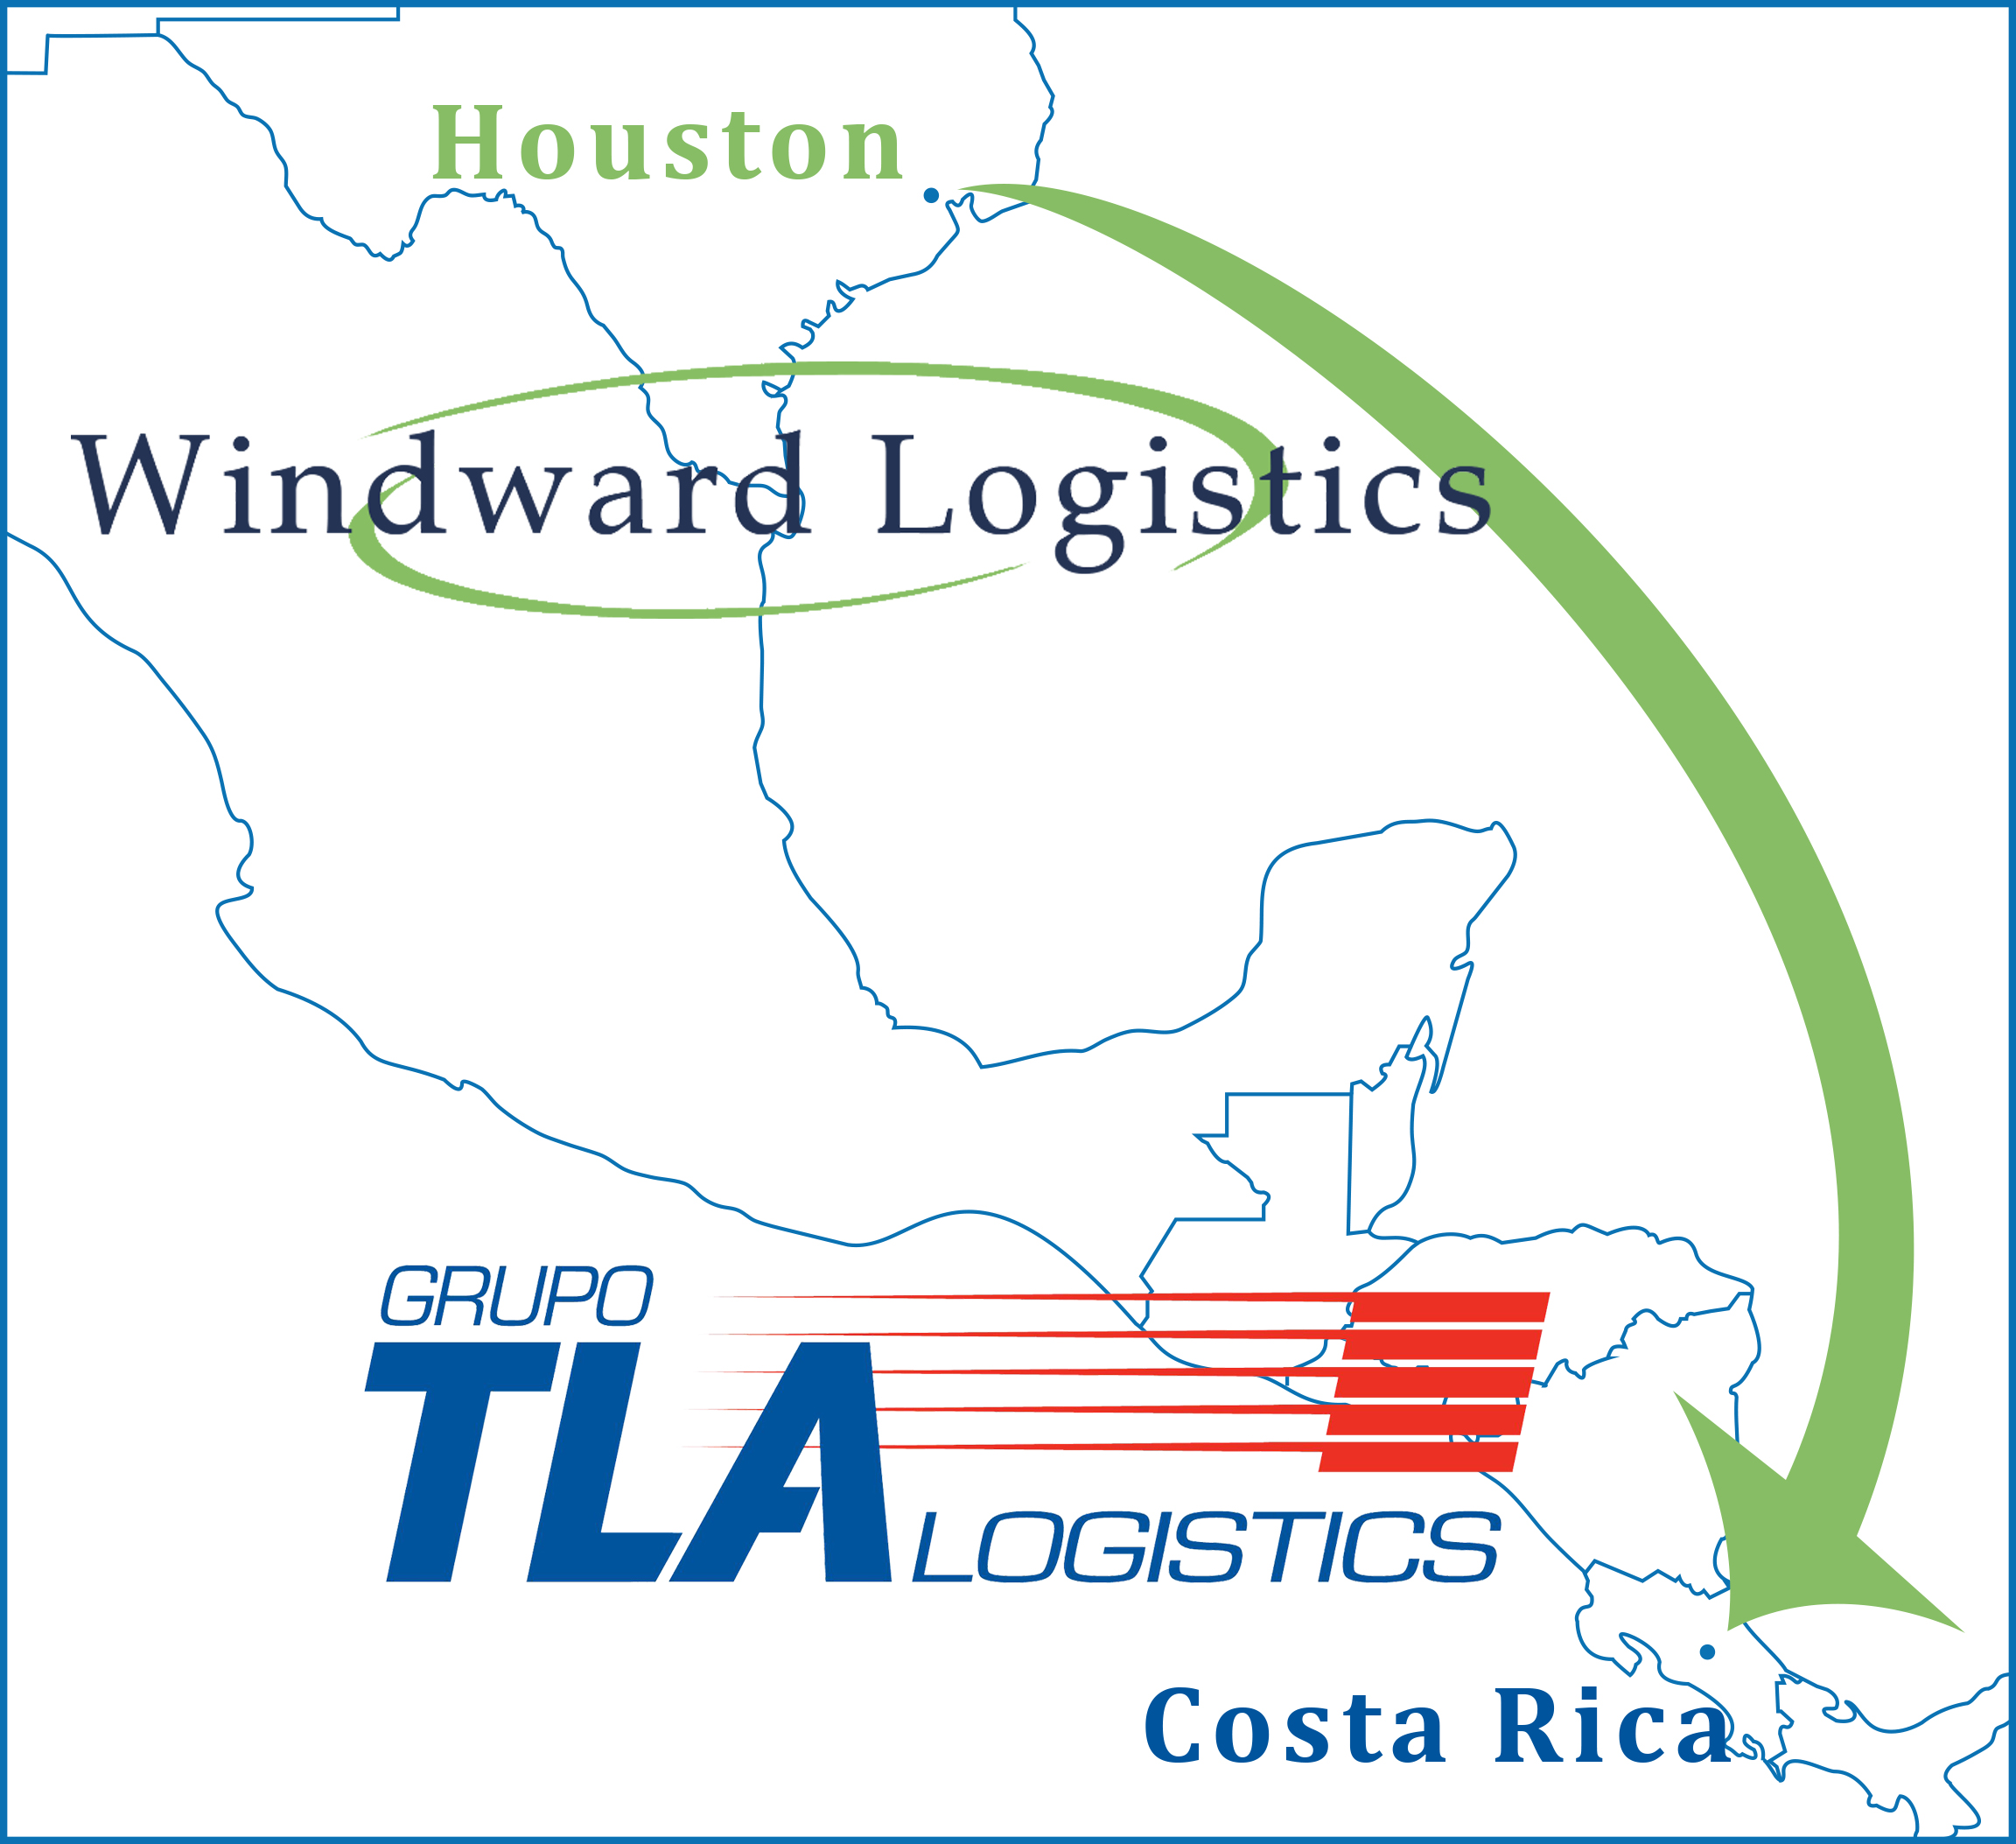 Windward Logistics and Grupo TLA